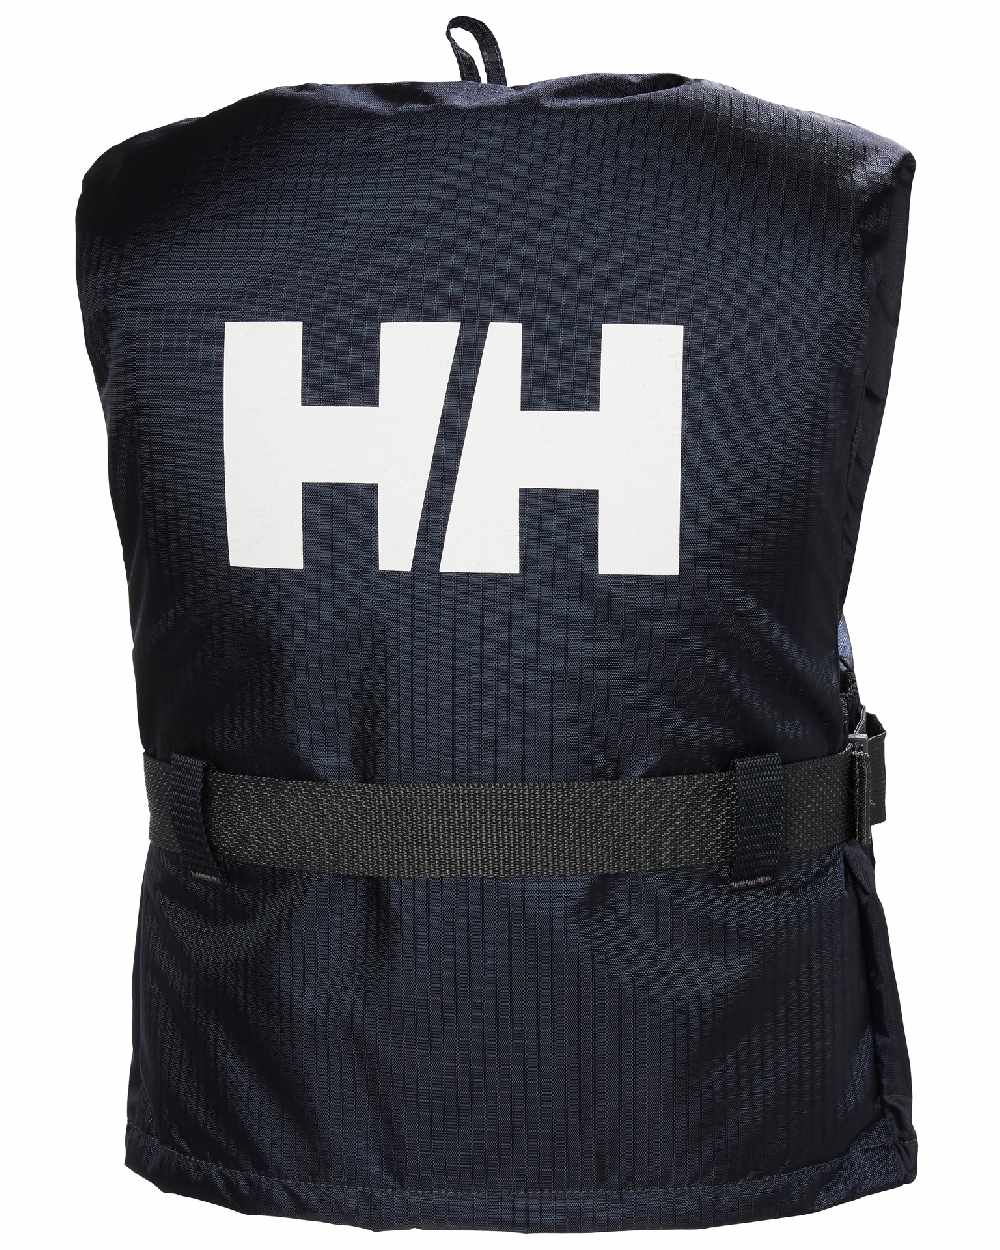 Navy coloured Helly Hansen Bowrider Life Vest on white background 